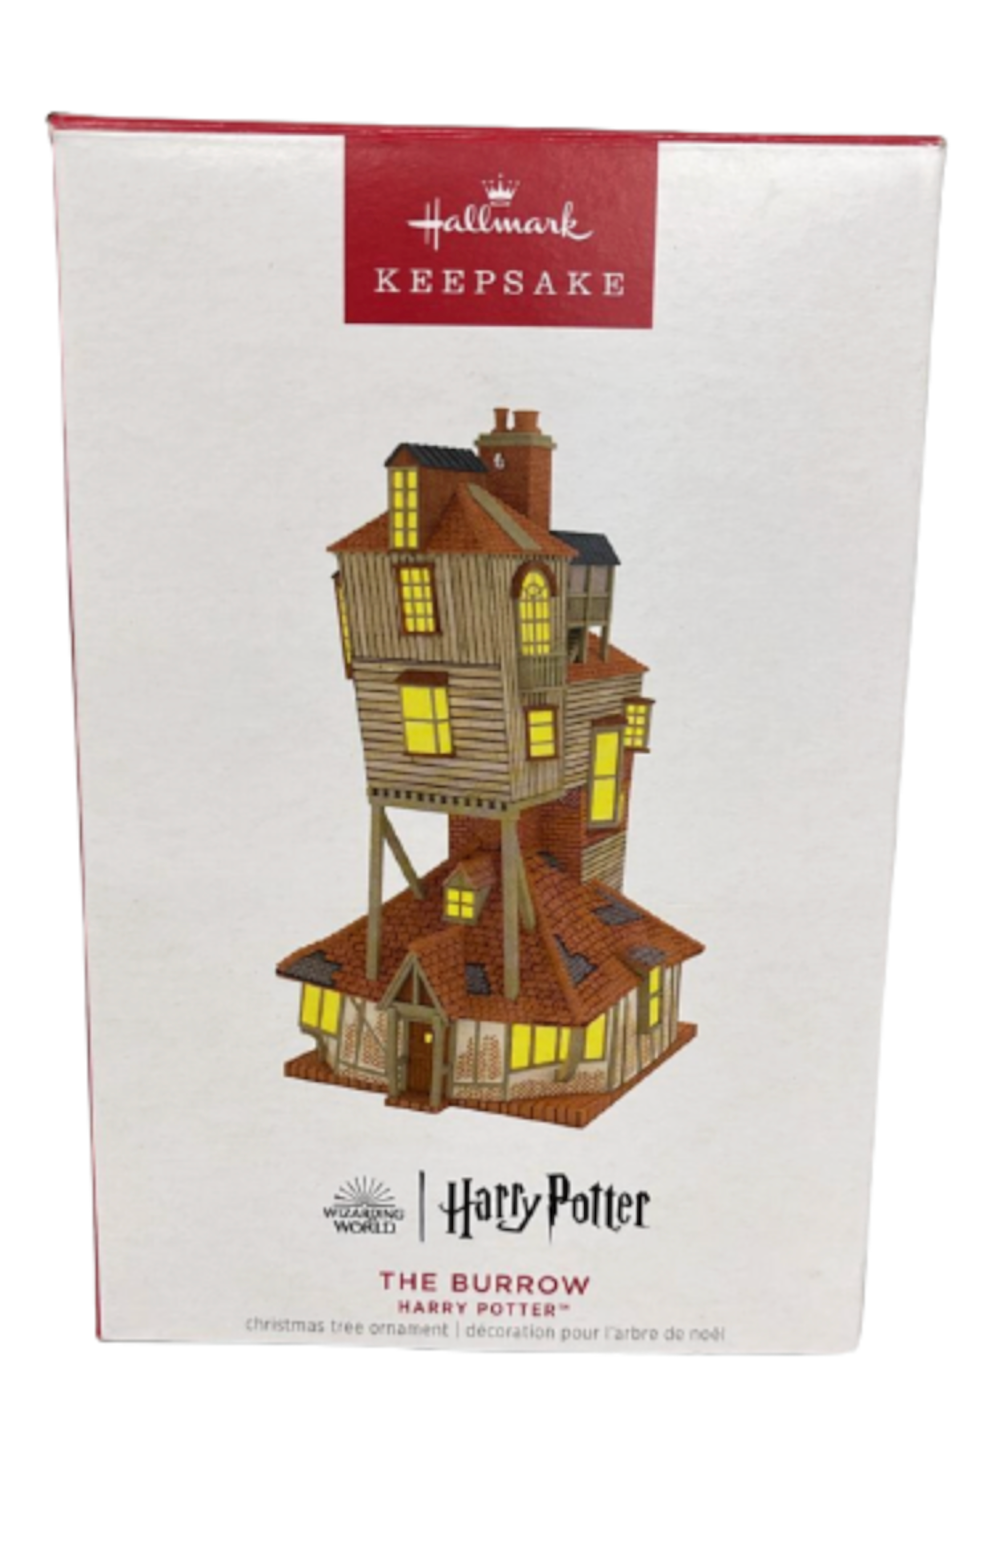 Hallmark 2023 Keepsake Harry Potter The Burrow Christmas Ornament New with Box